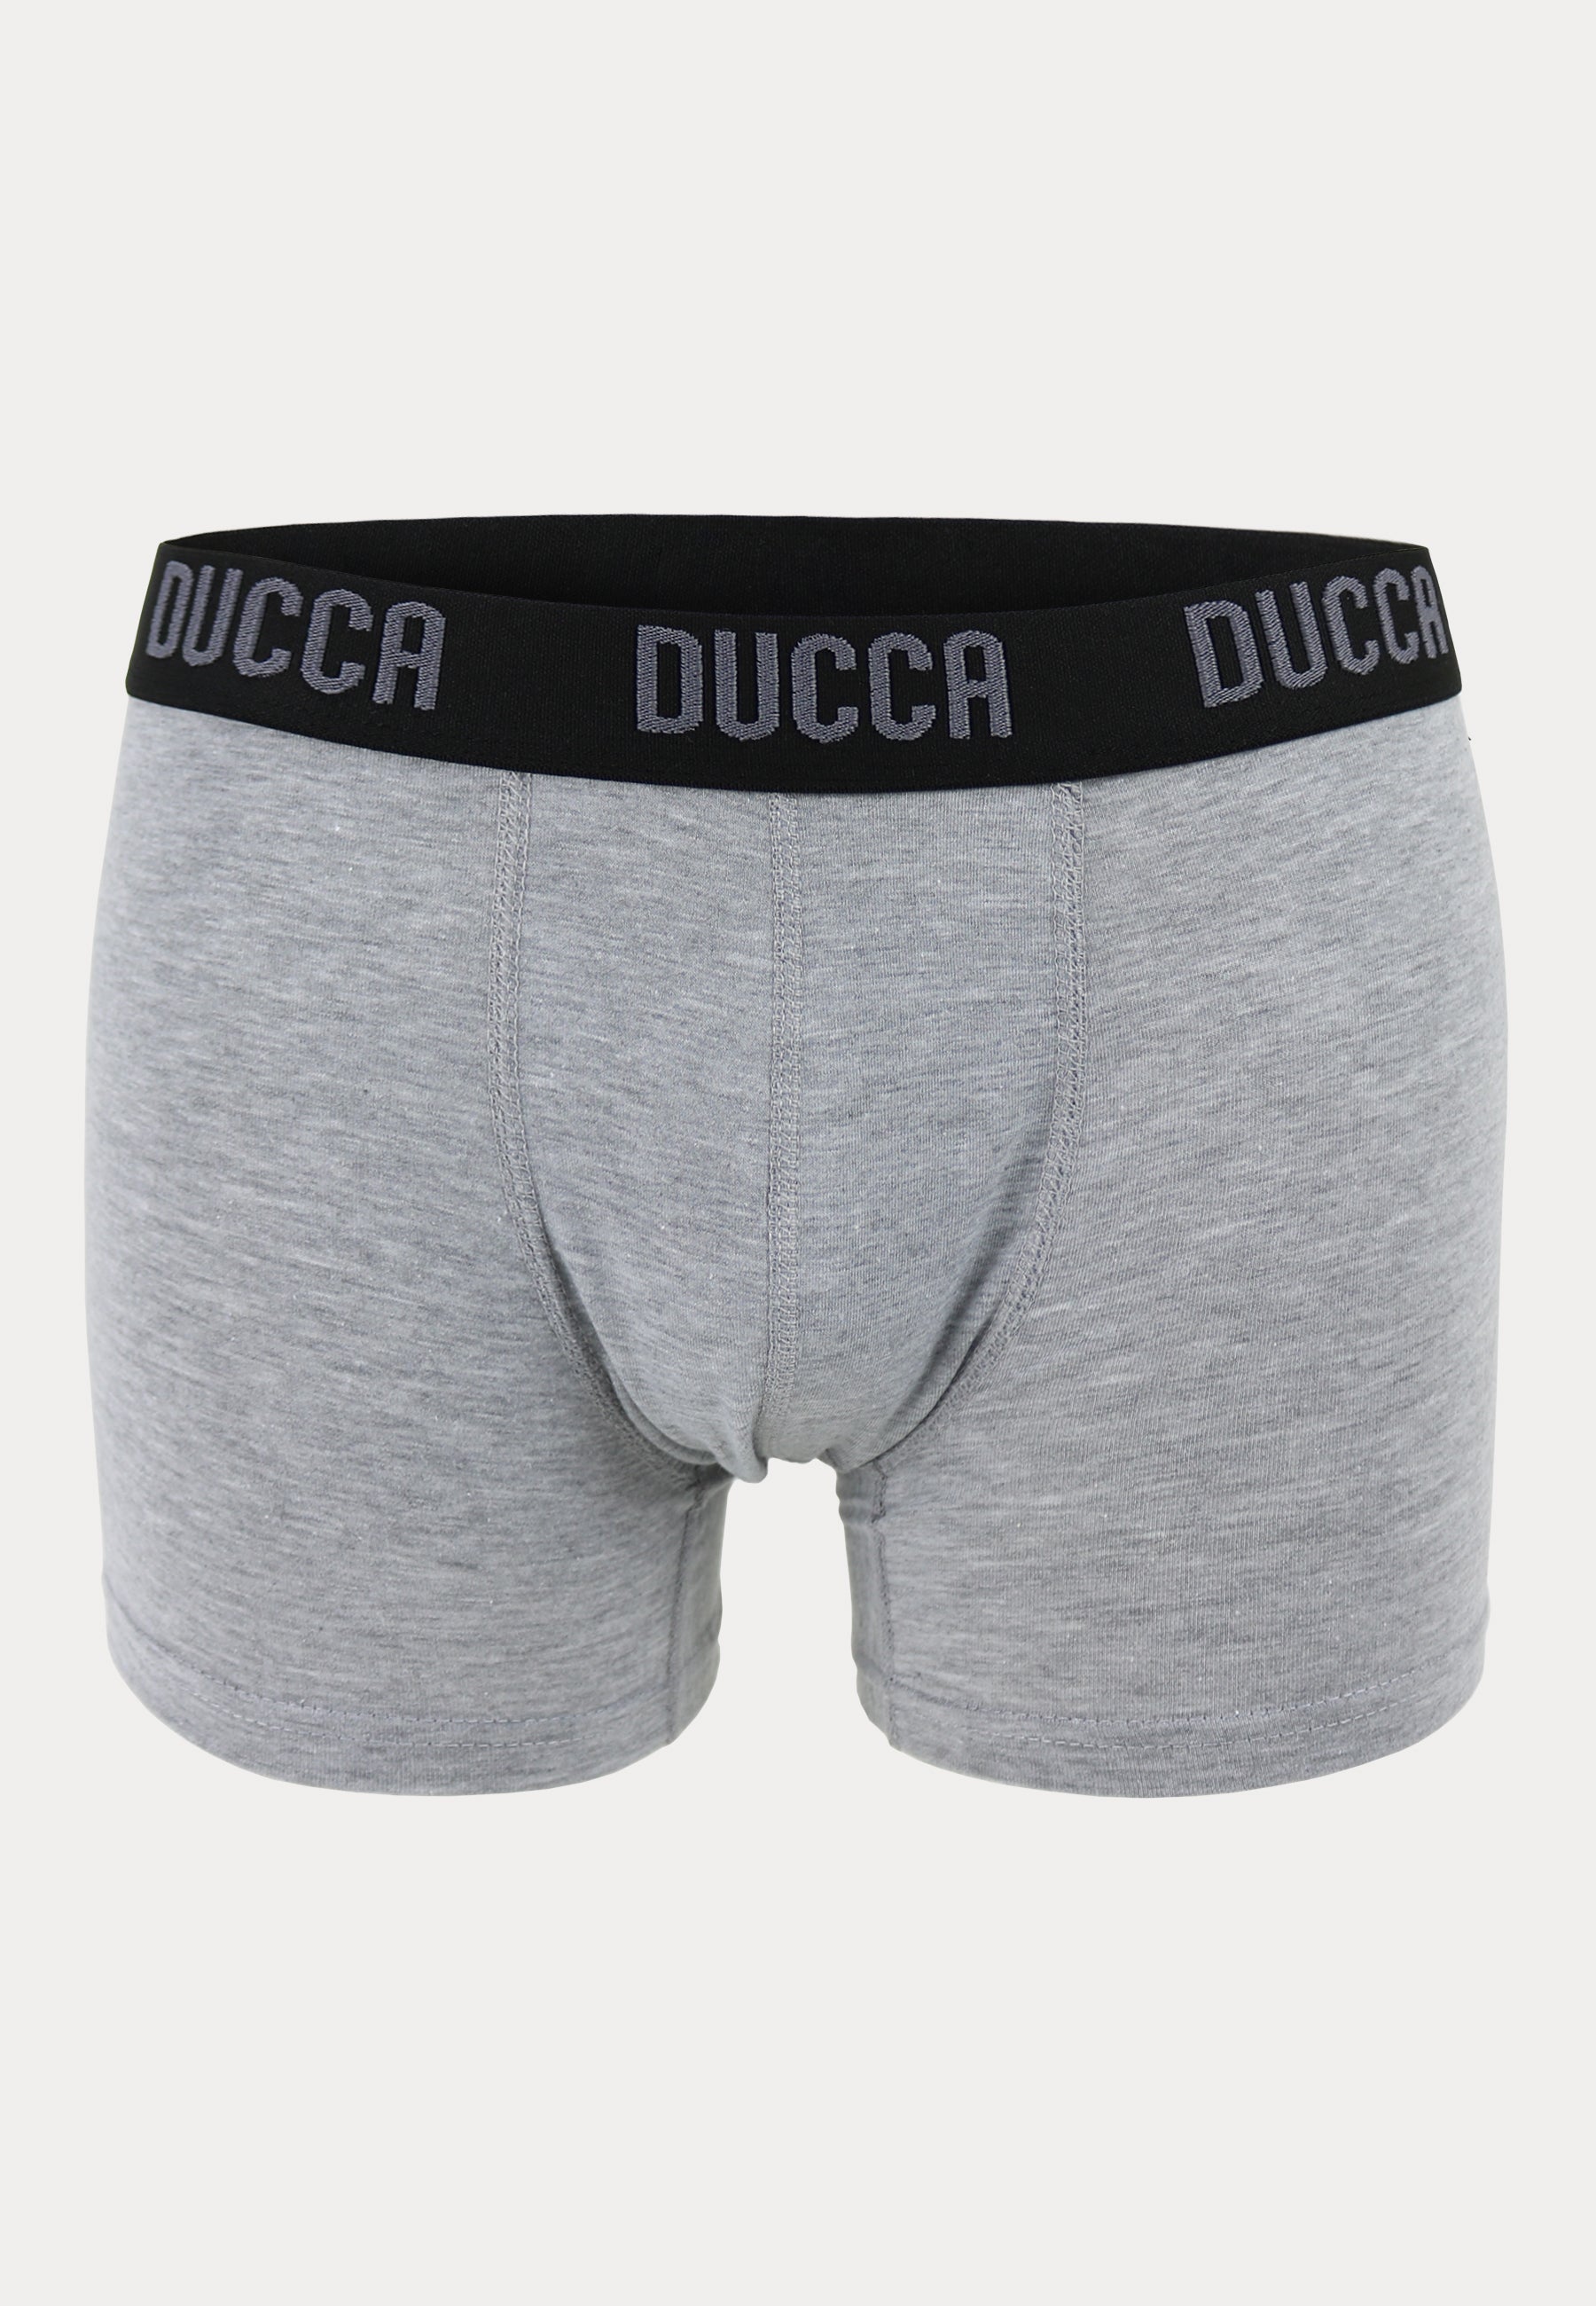 Ducca - Boxershorts - 16 Pack - Multi Color